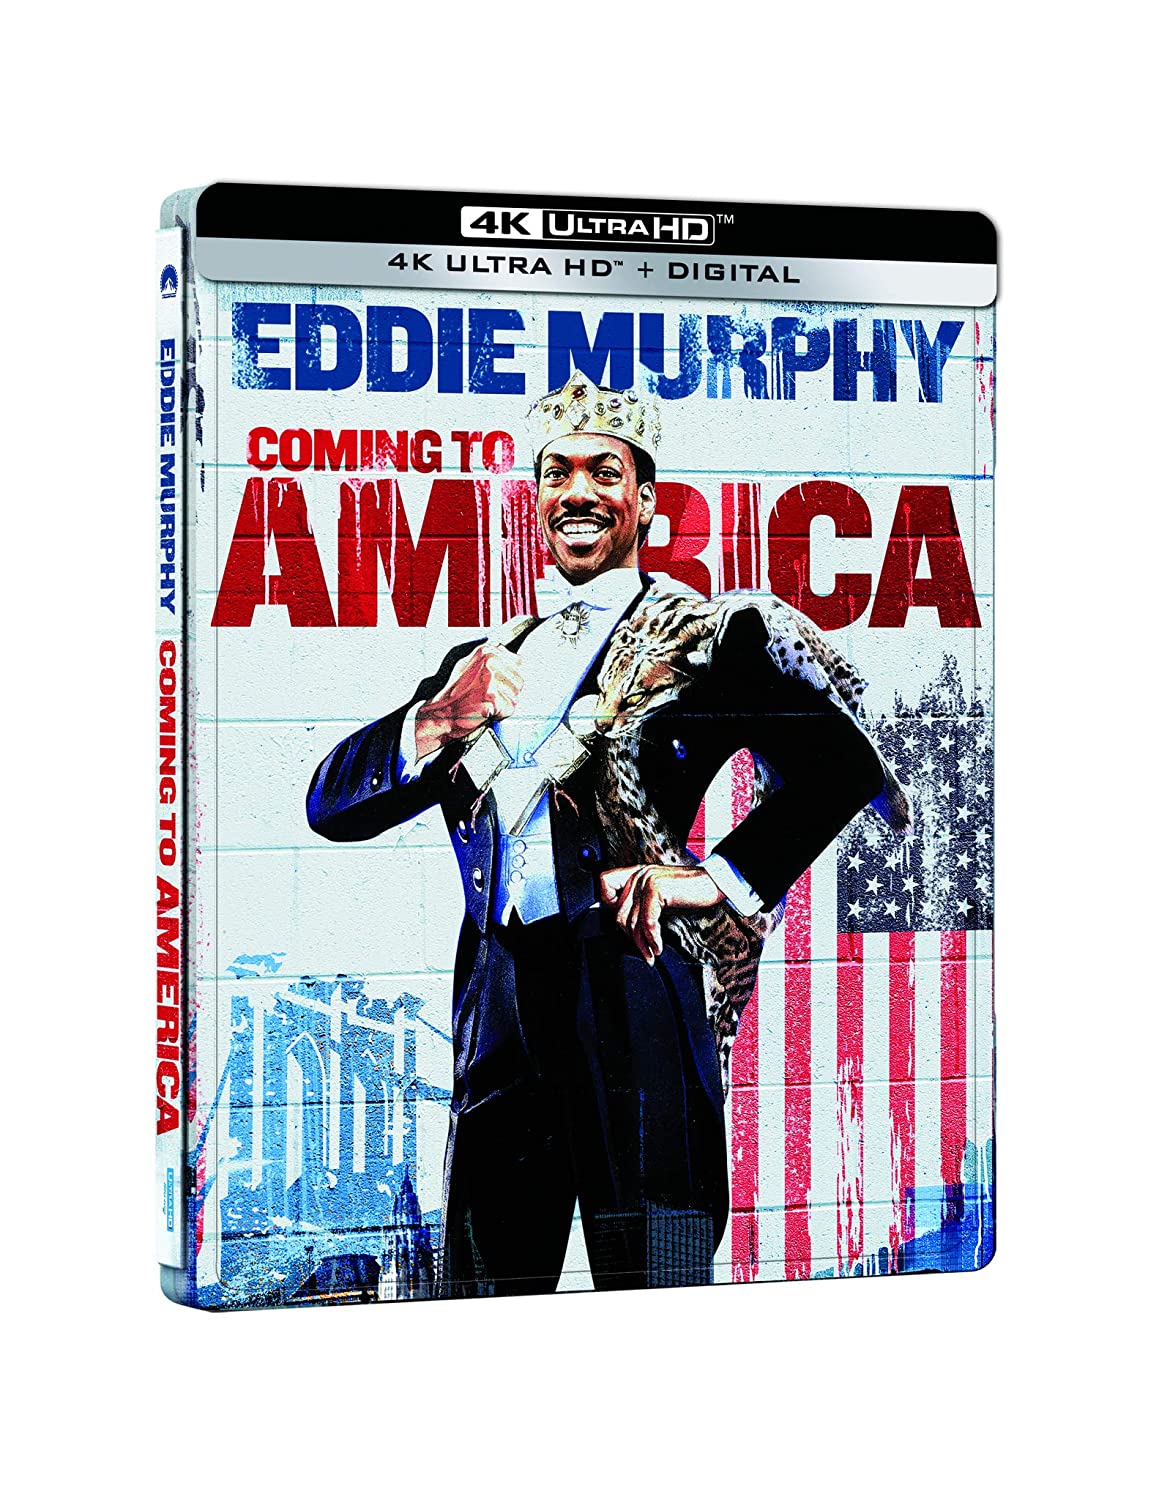 Amazon.com: Coming to America (4K UHD + Digital Steelbook) : Eddie Murphy, Arsenio Hall, James Earl Jones: Movies & TV $9.96